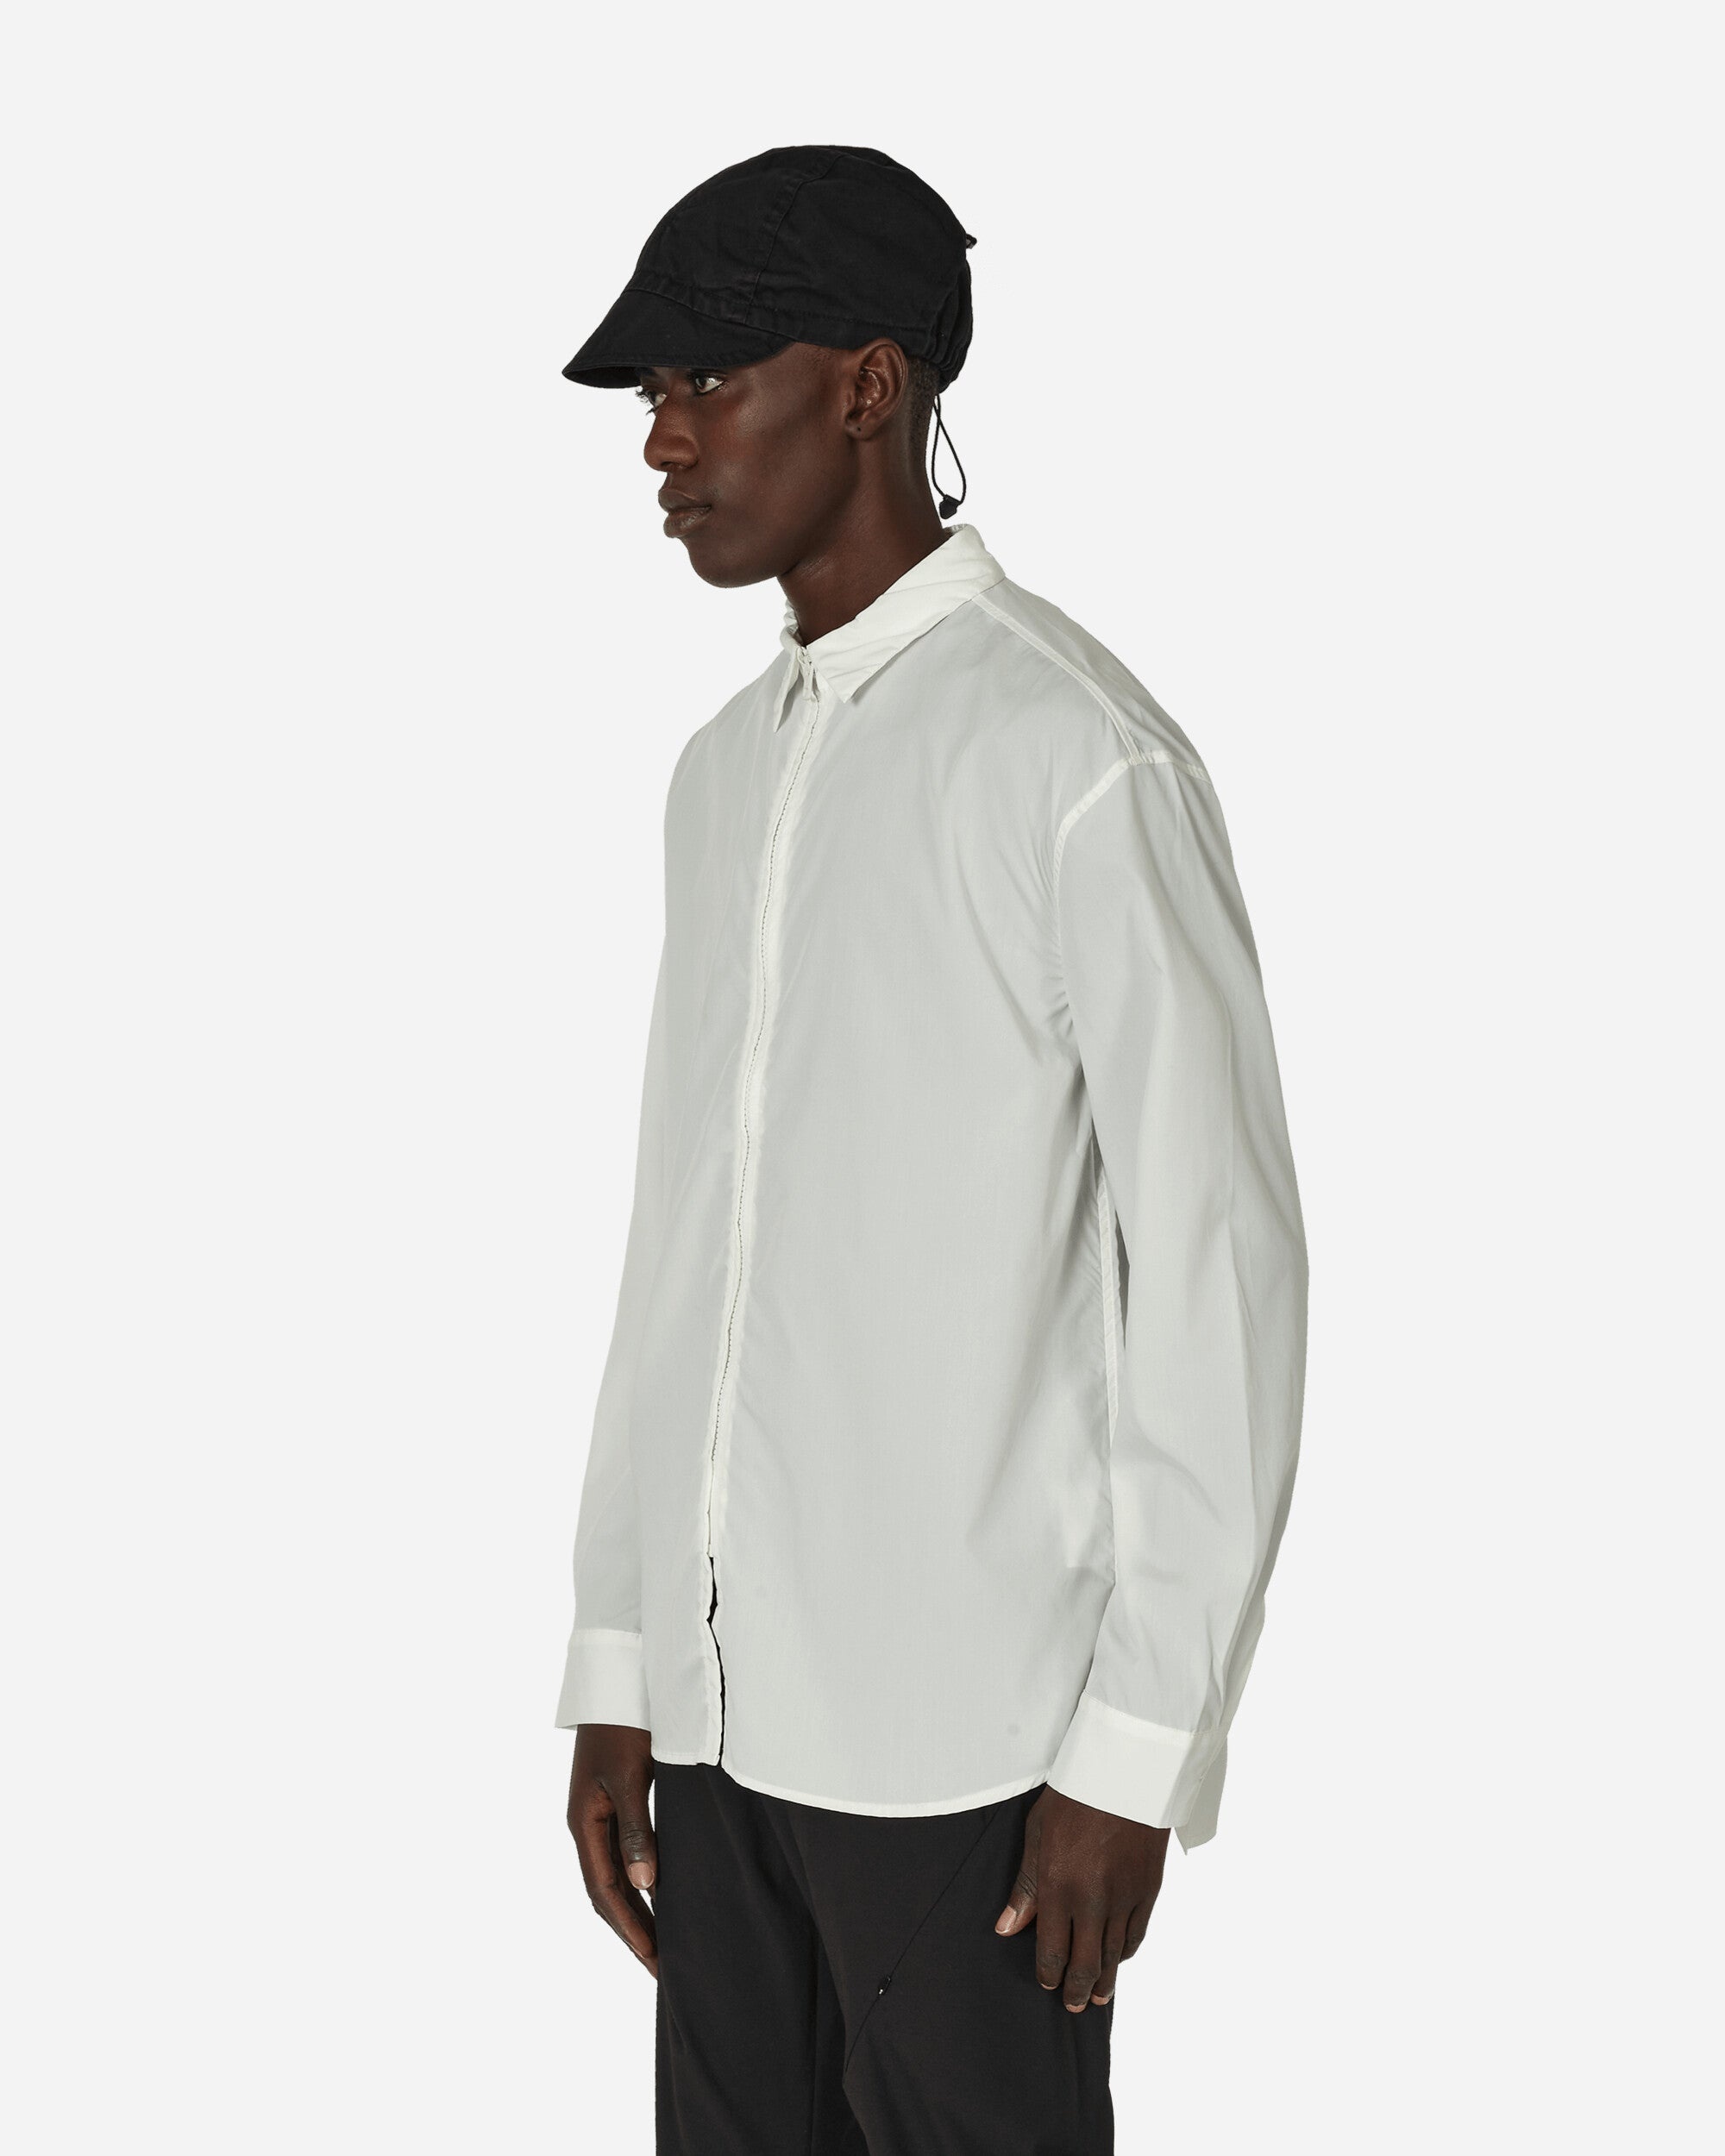 5.1 Shirt (Right) White - 2